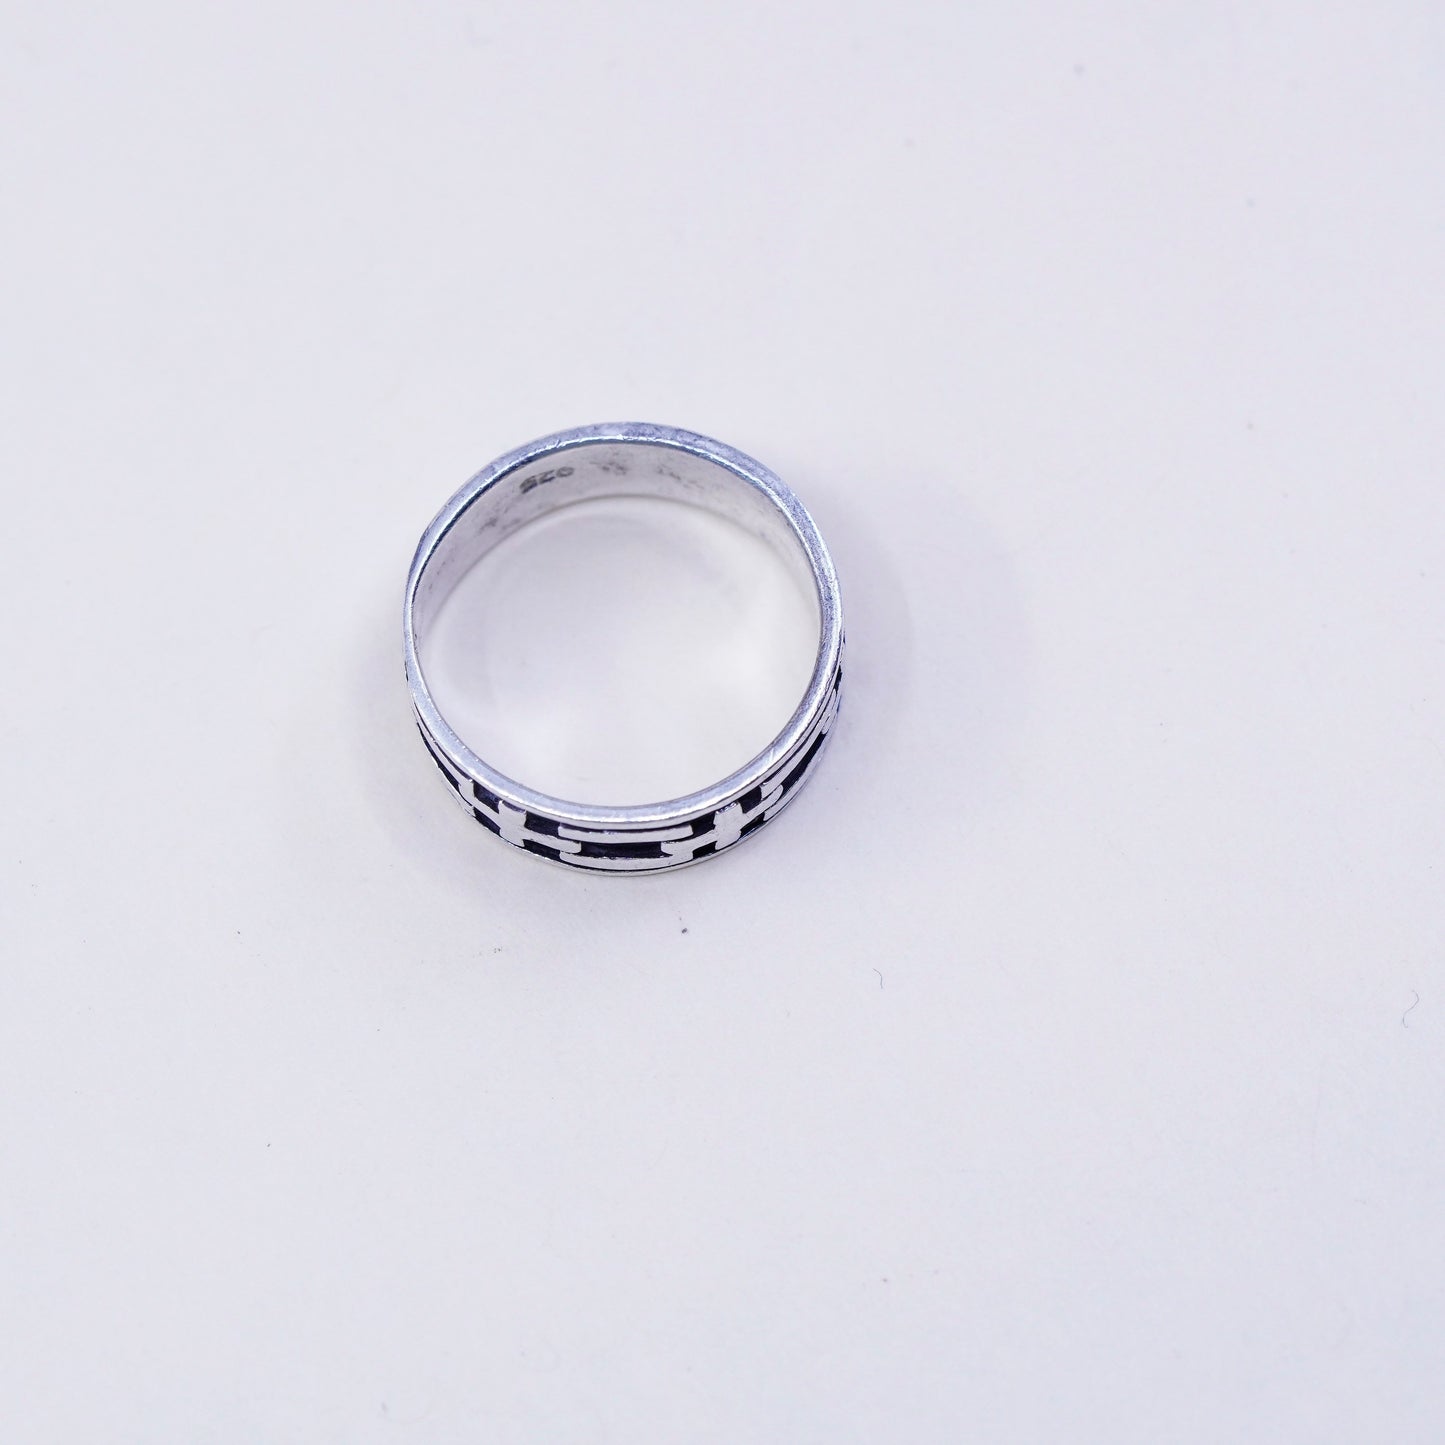 Size 5.25, vintage hopi Sterling silver handmade ring, 925 cross embossed band